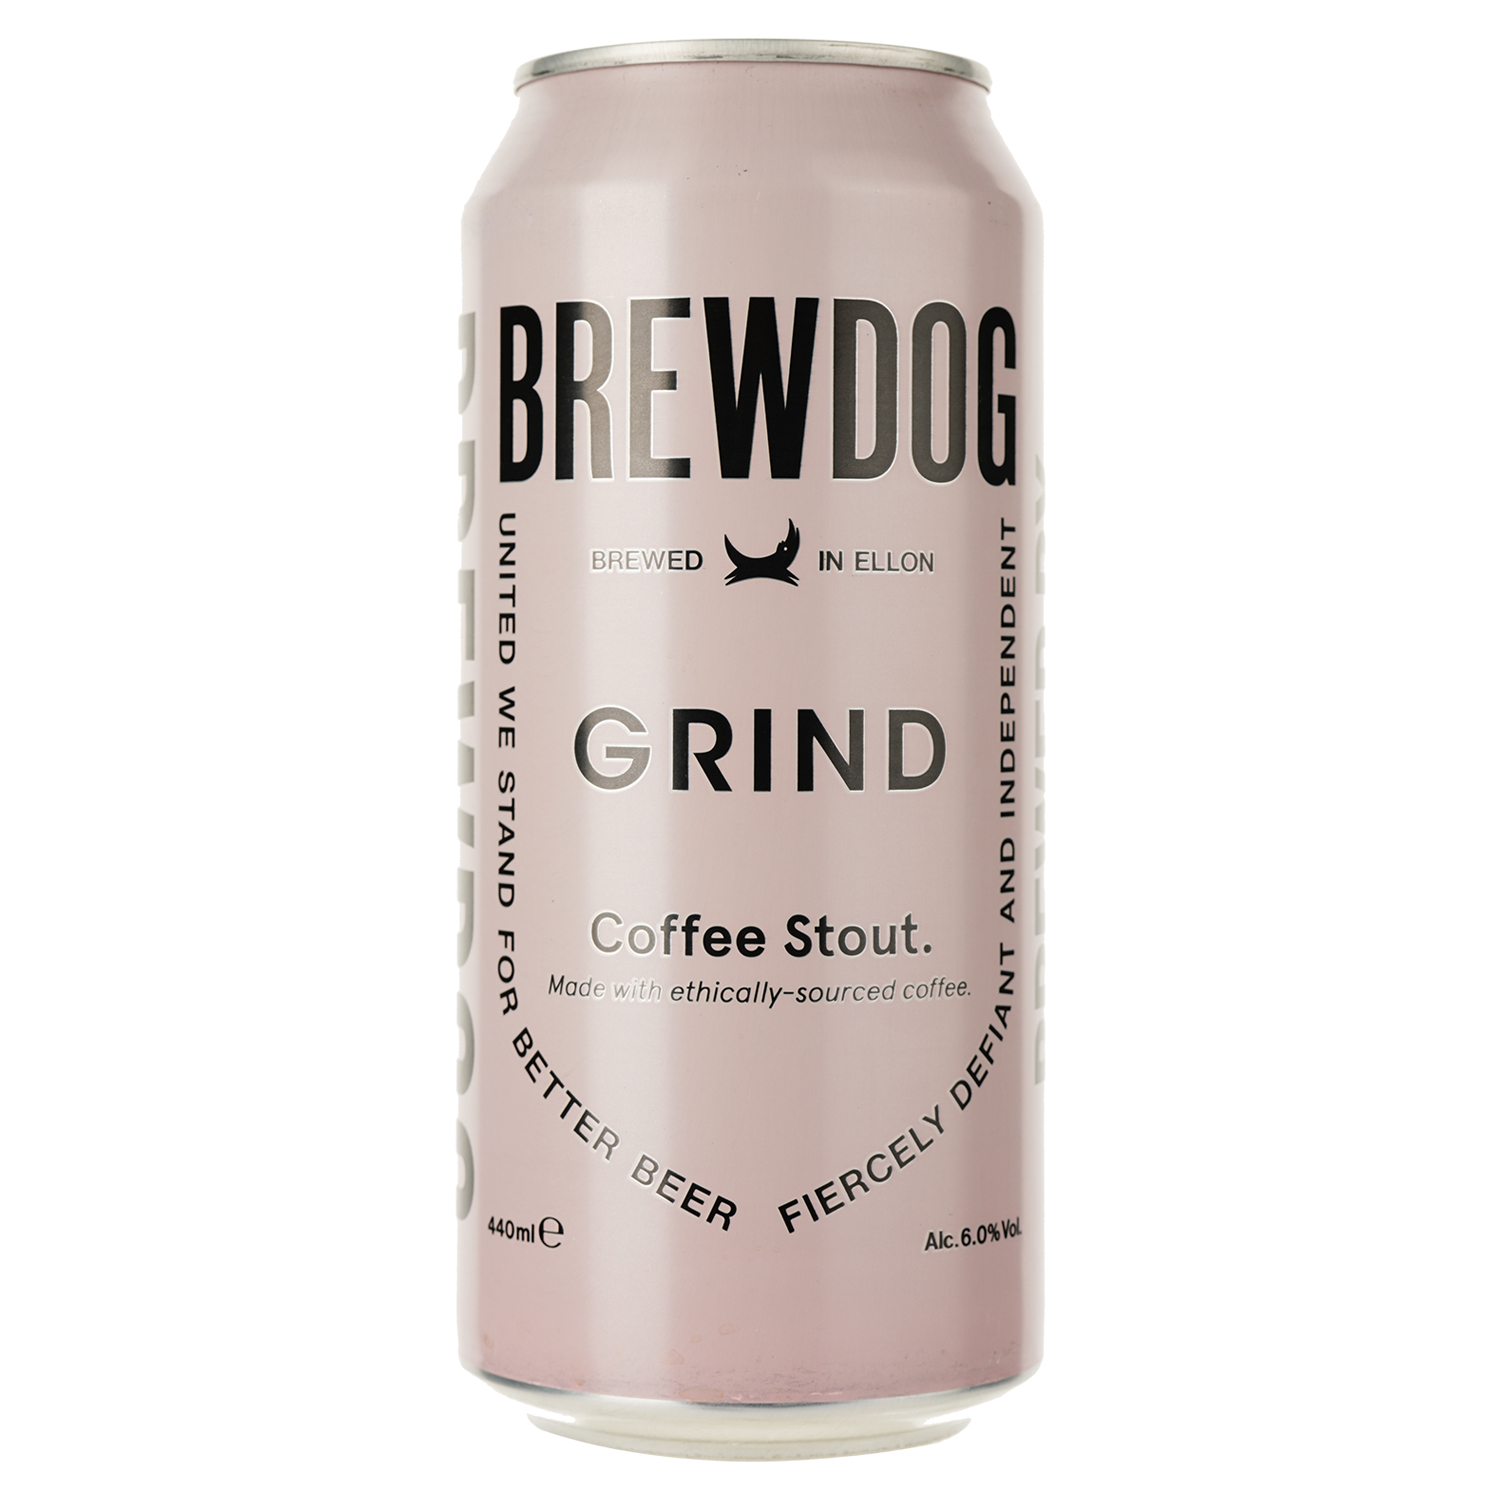 Пиво BrewDog Grind темное 6% 0.44 л ж/б - фото 1